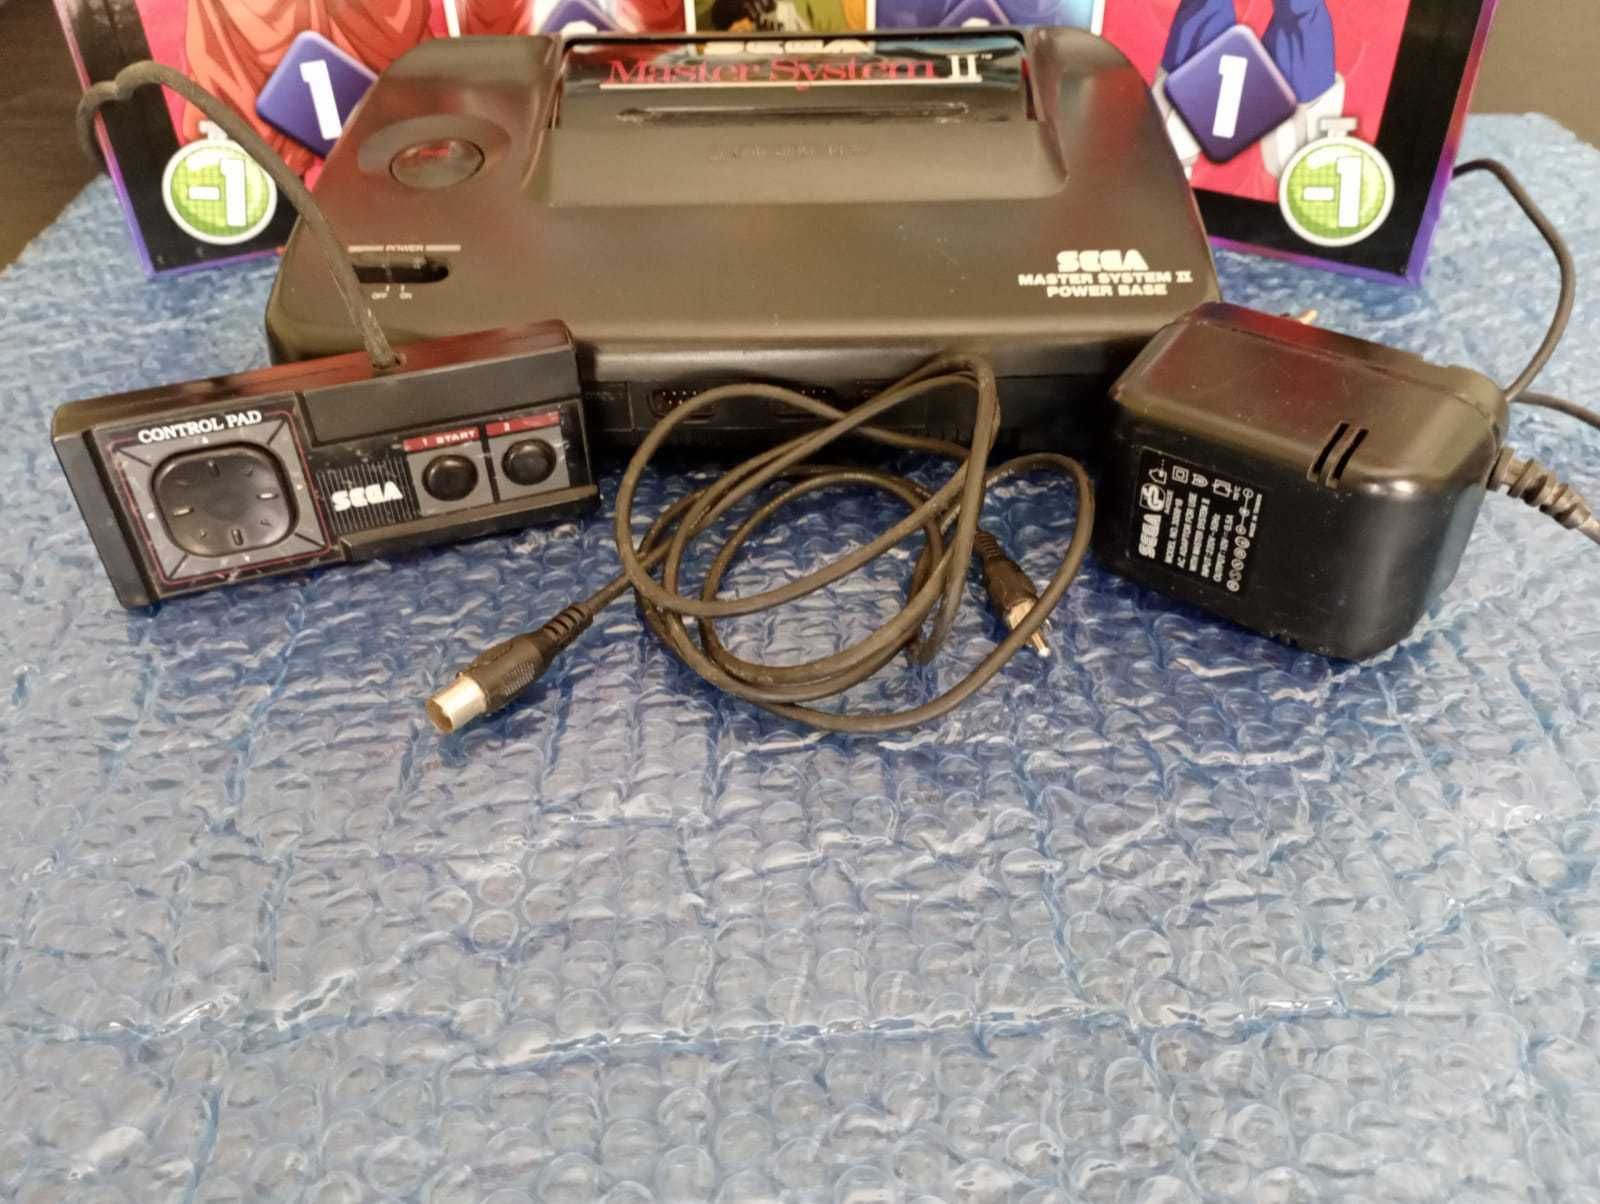 Consola Master System II completa